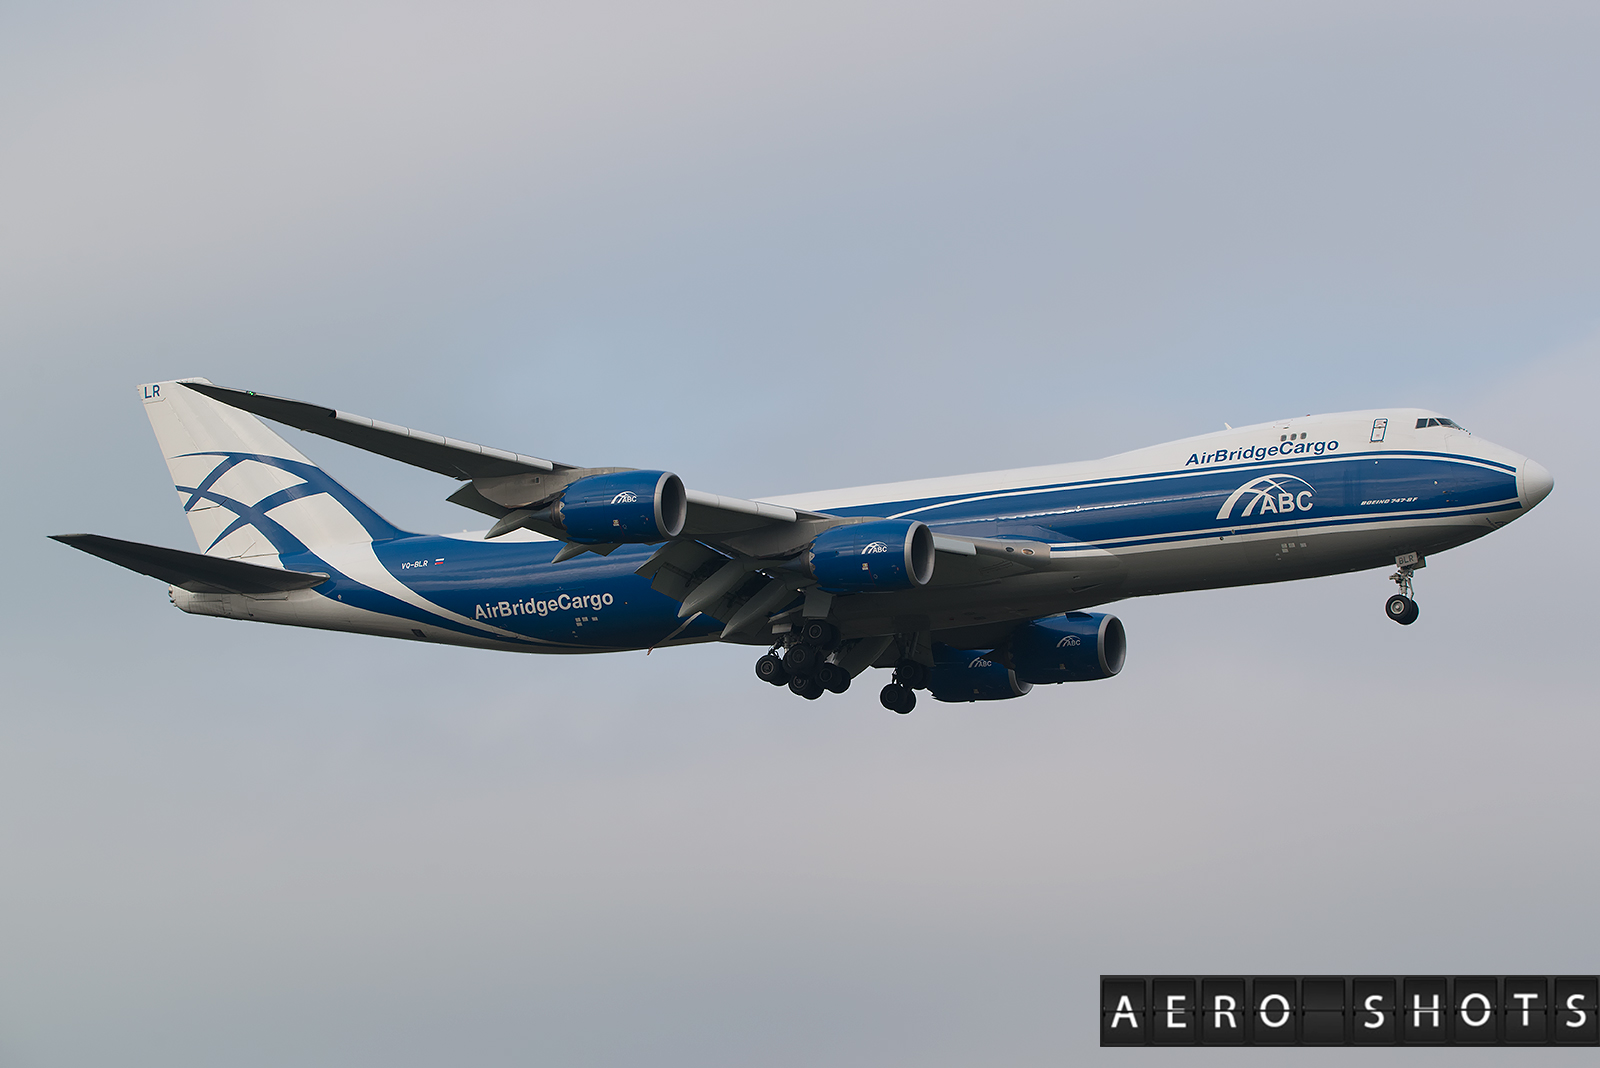 ABC_Cargo_VQ-BLR_747-8F_Frankfurt_FRA